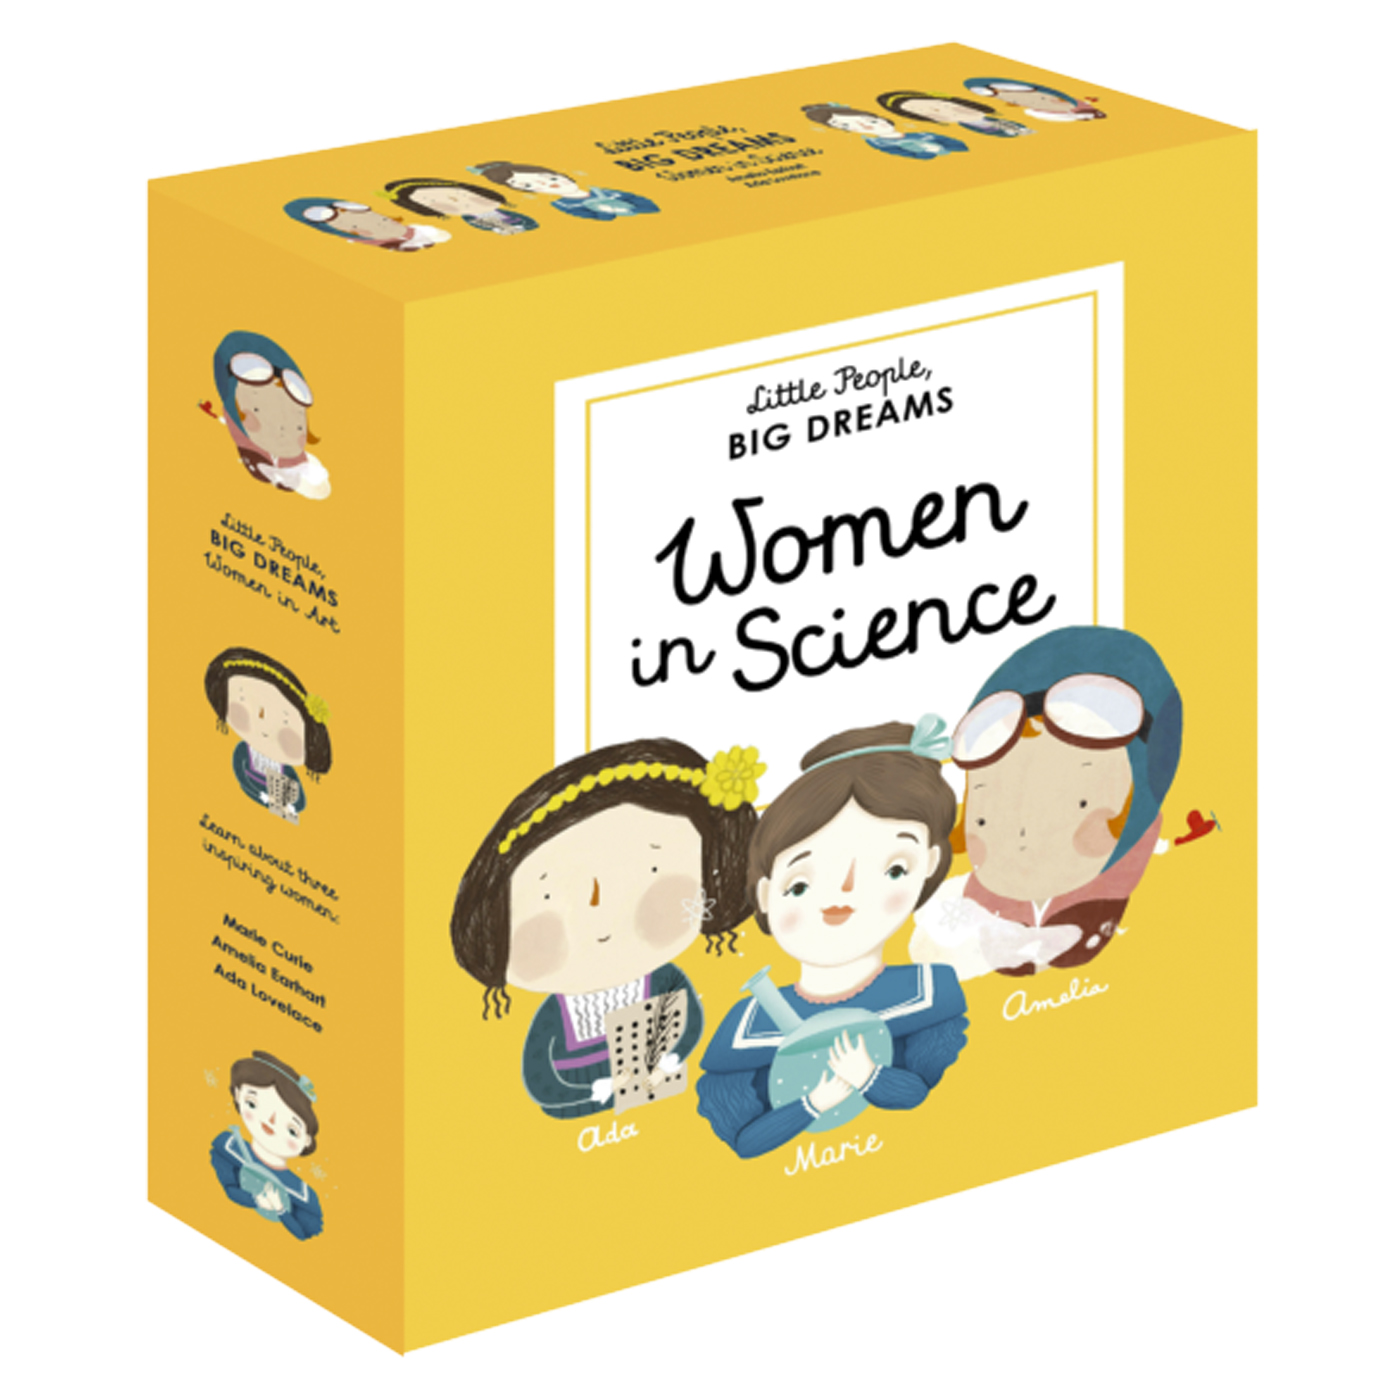 FRANCES LINCOLN Little People Big Dreams: Women in Science